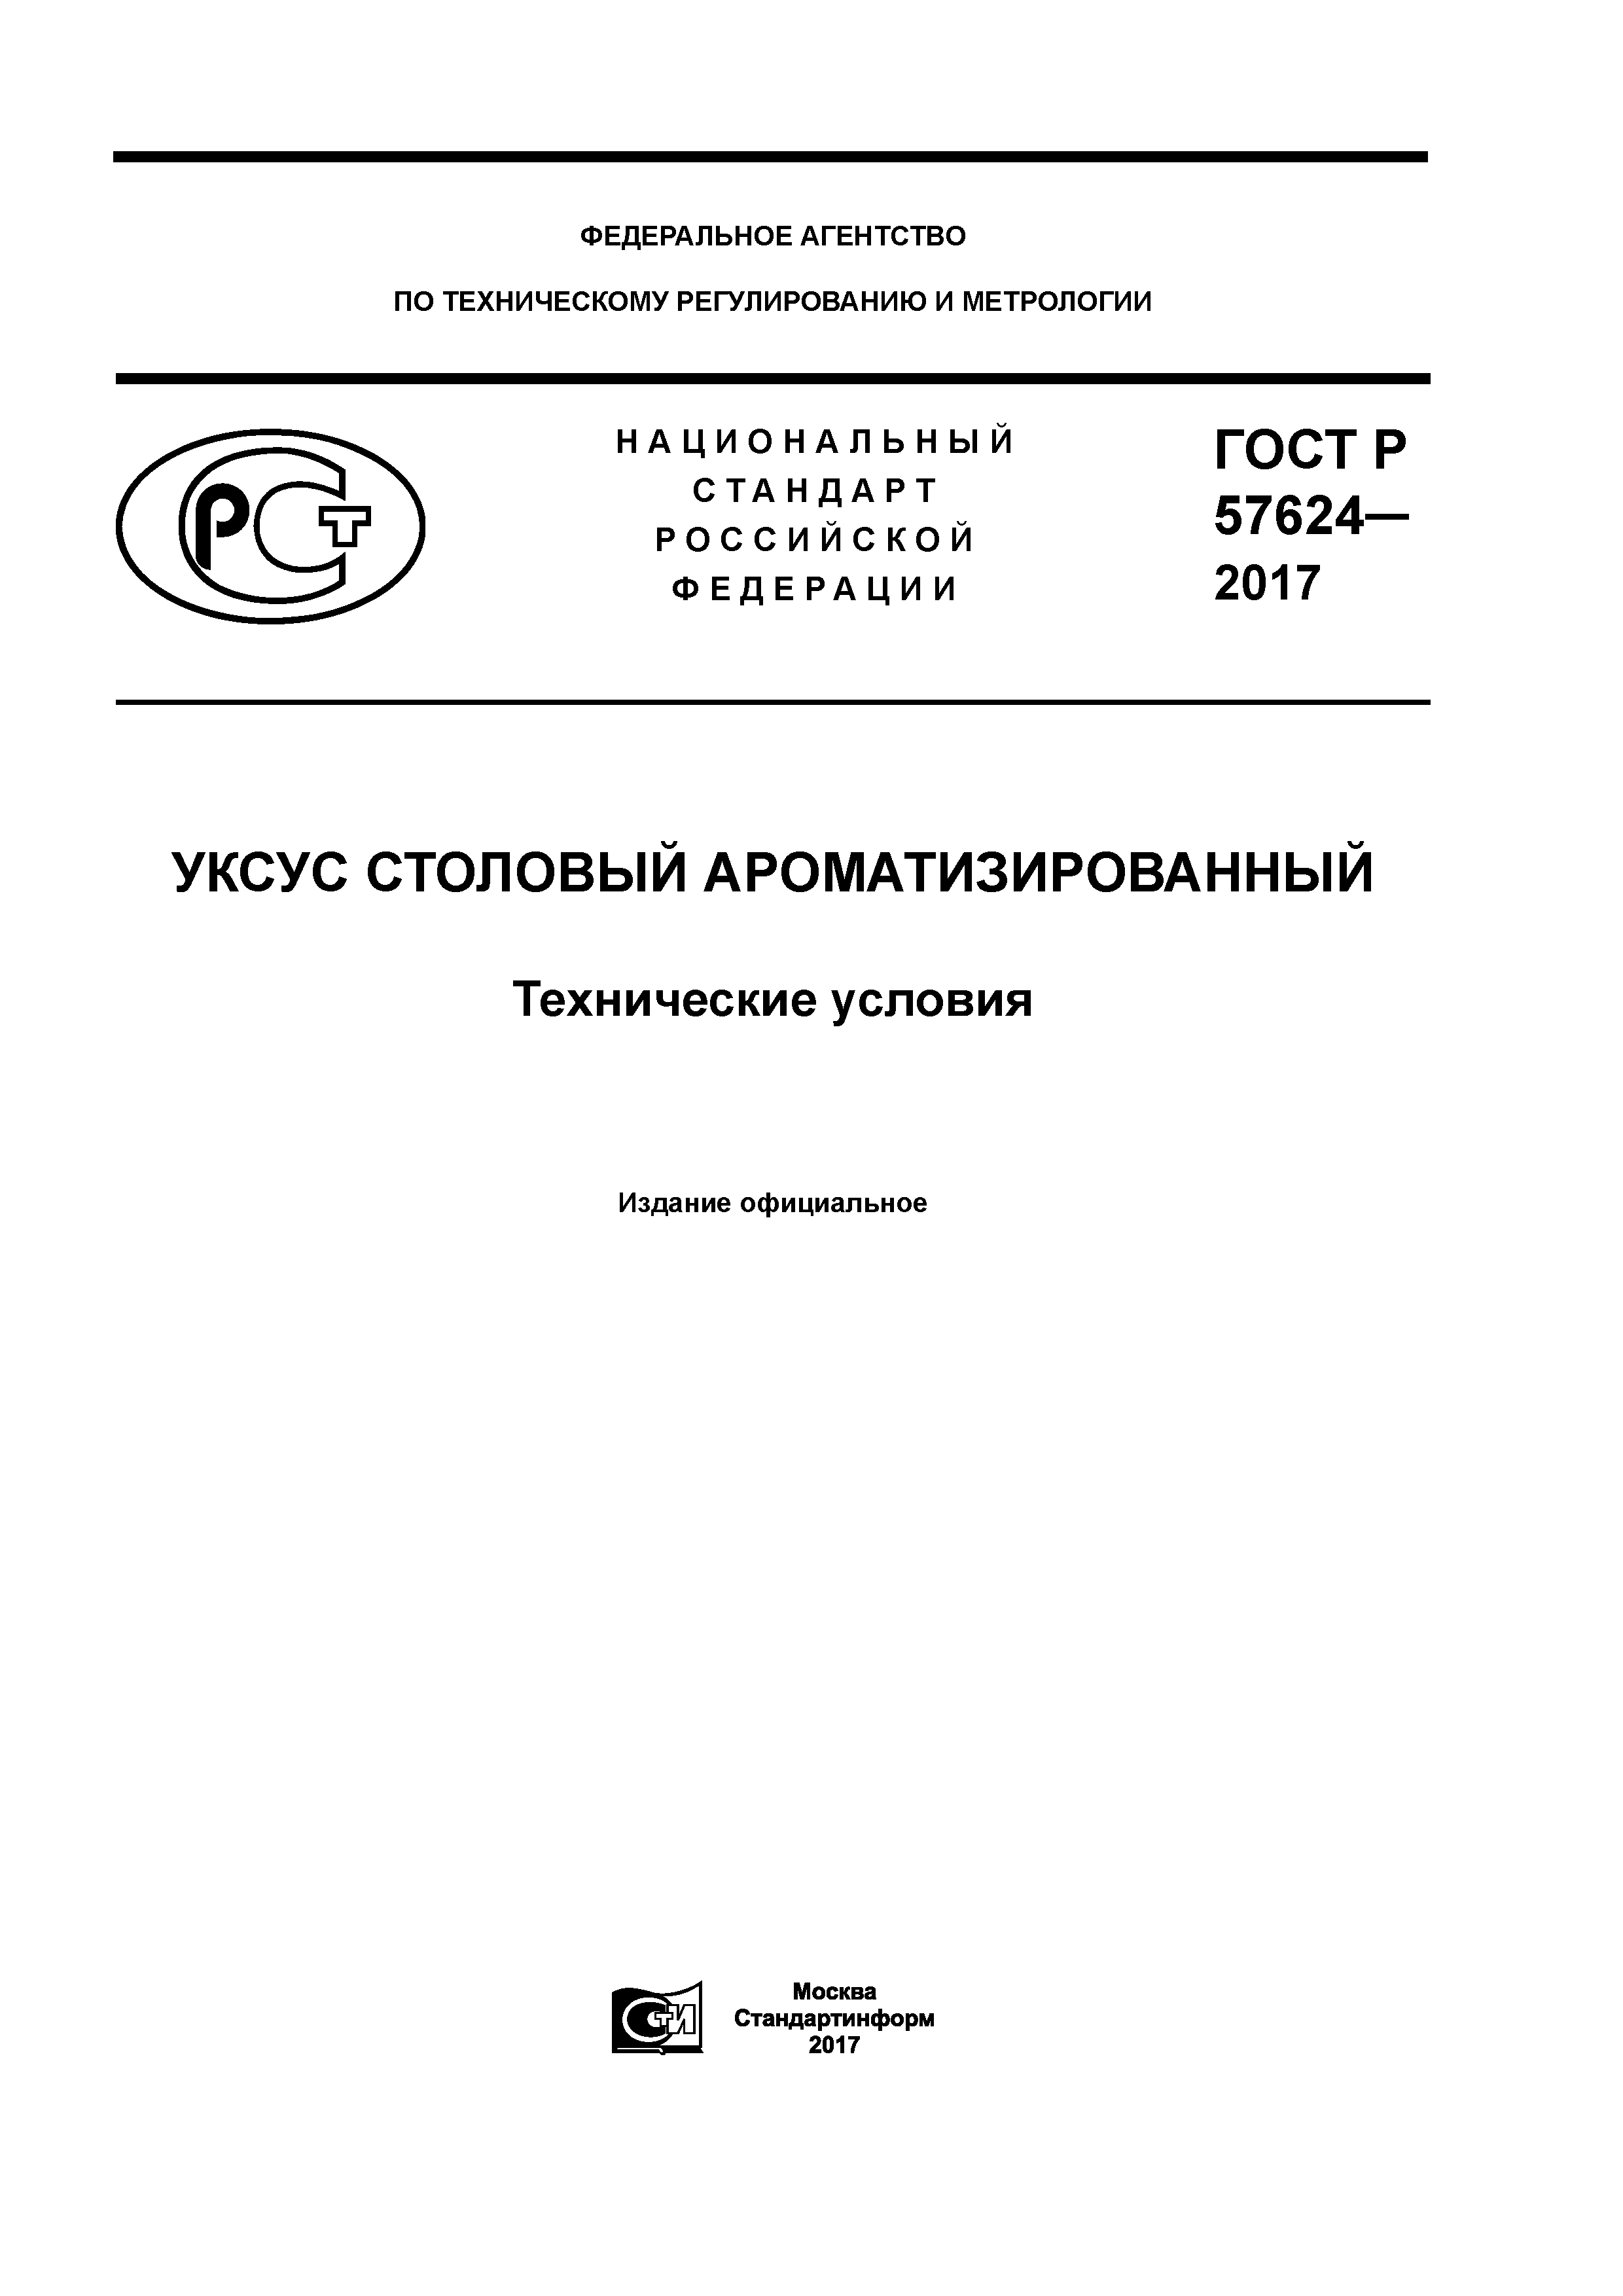 ГОСТ Р 57624-2017